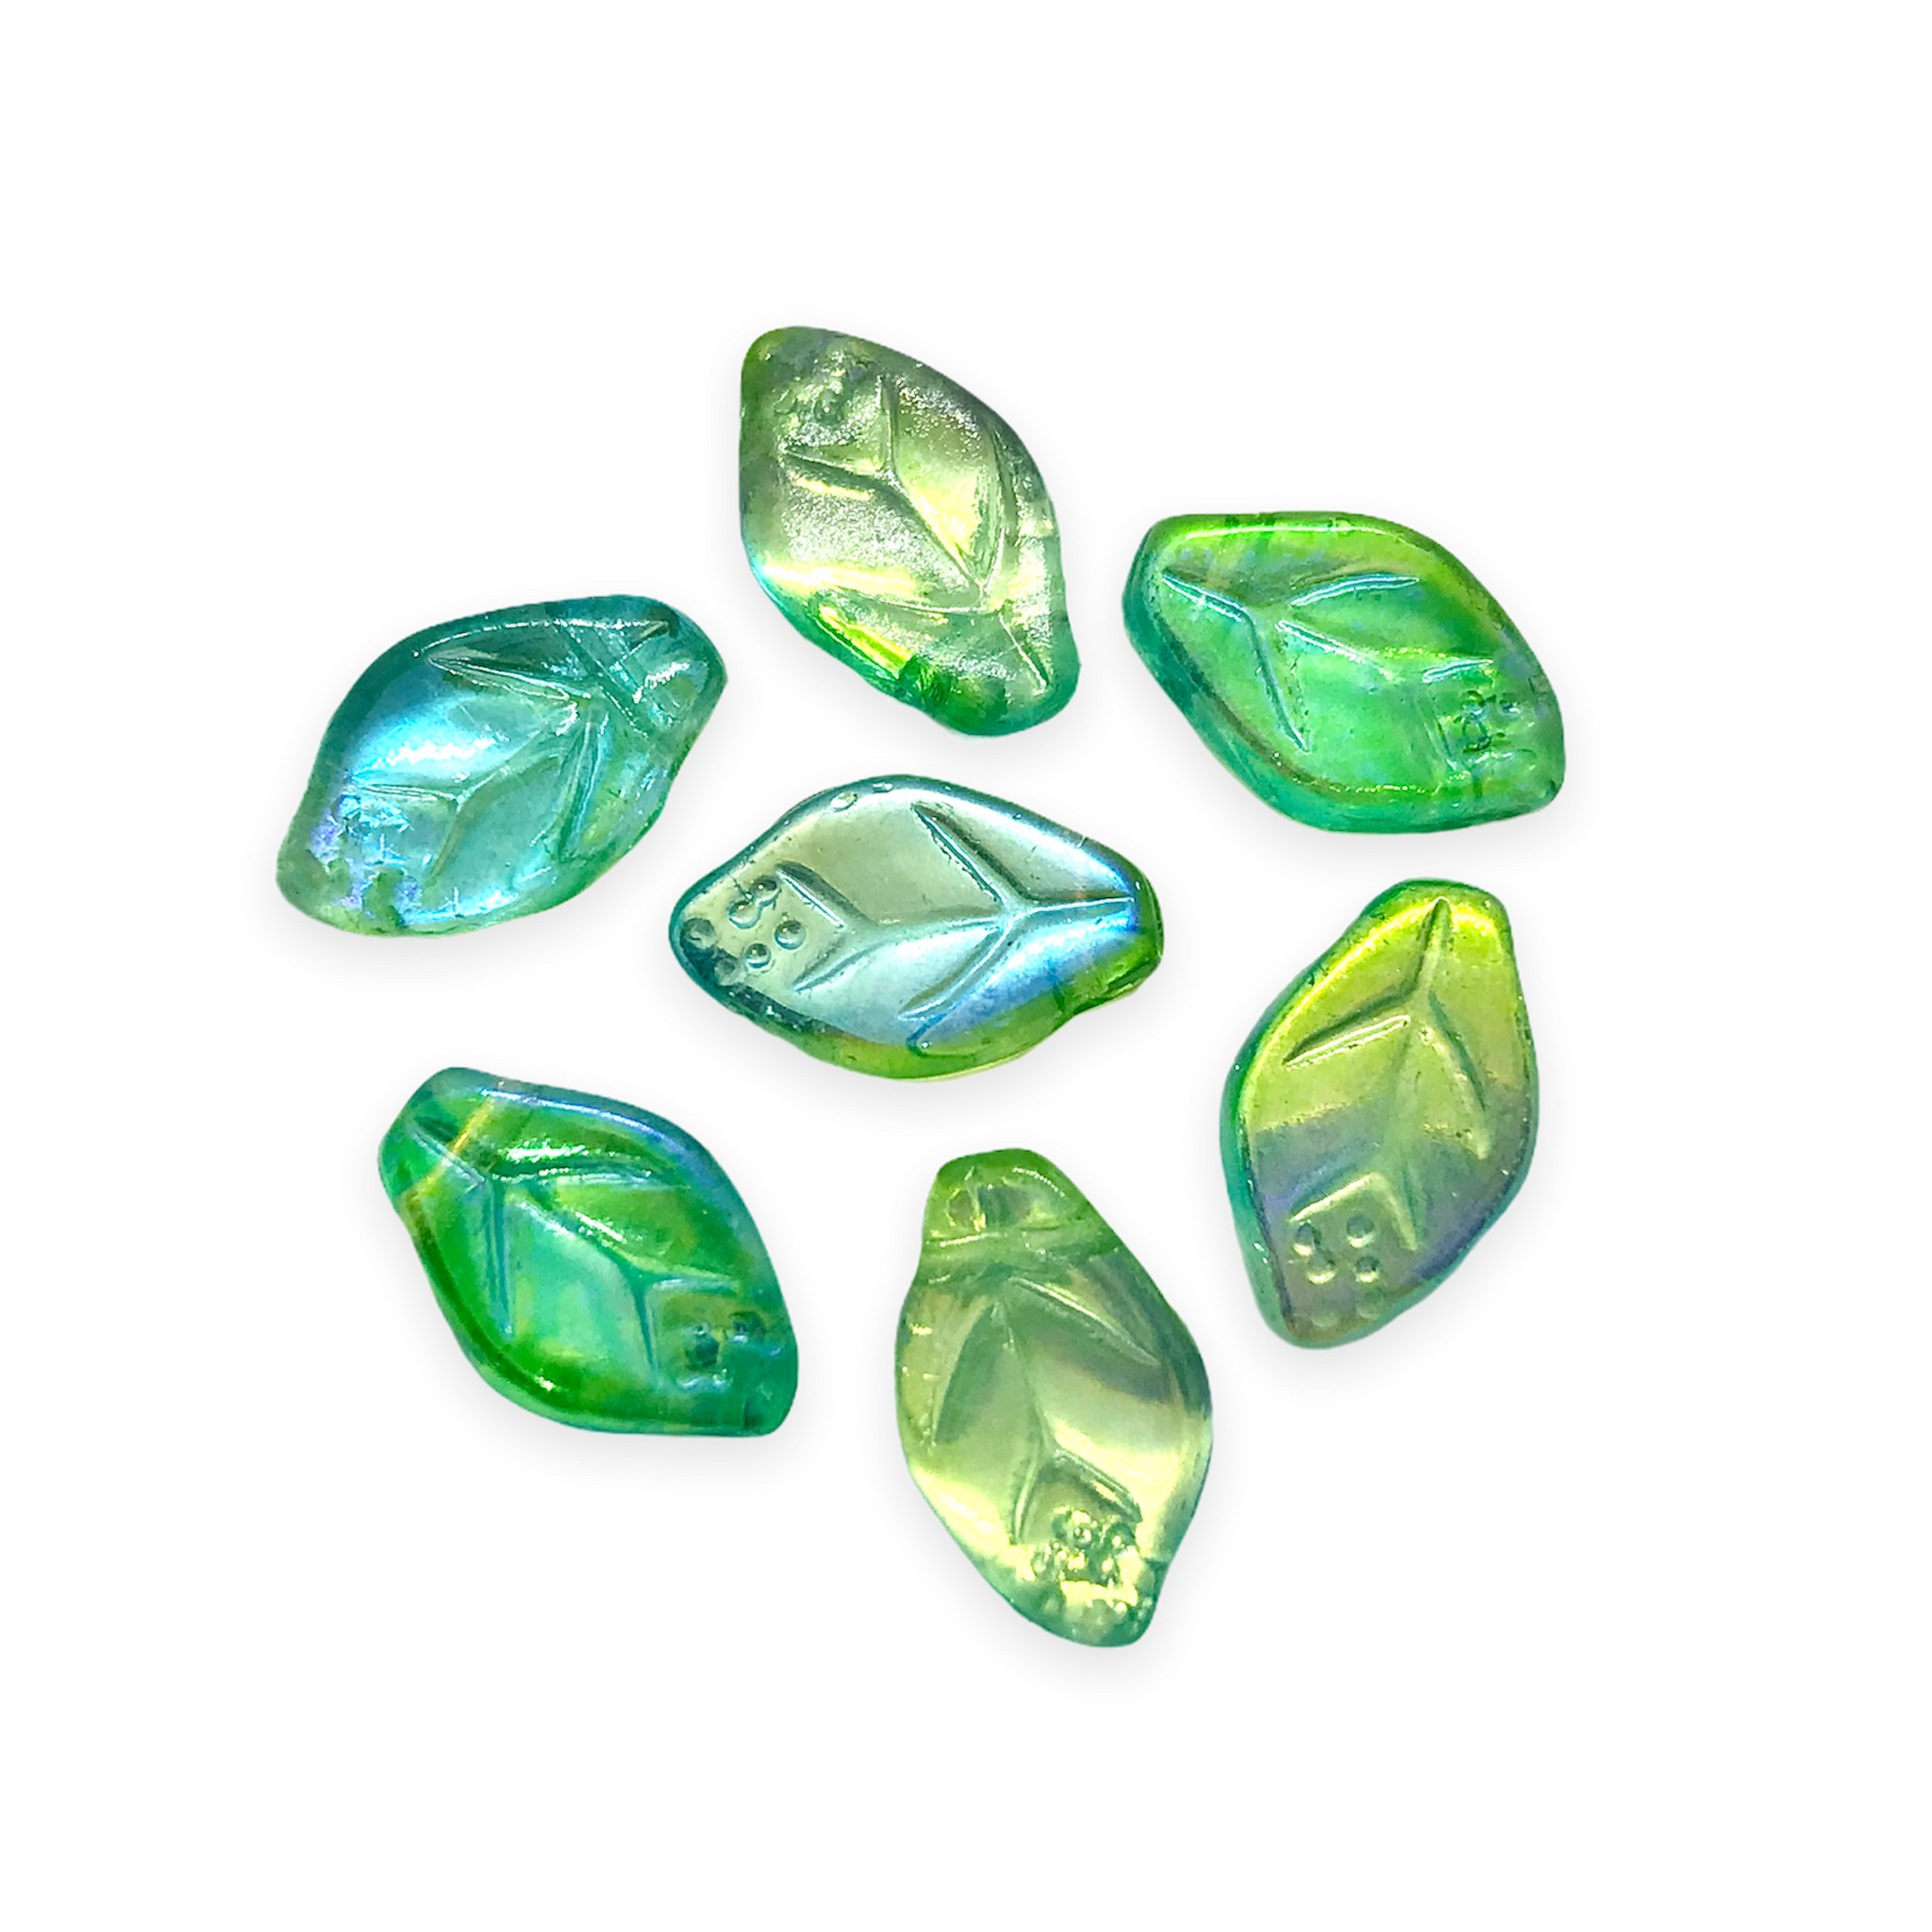 Czech glass leaf beads 25pc translucent light green blue gold AB